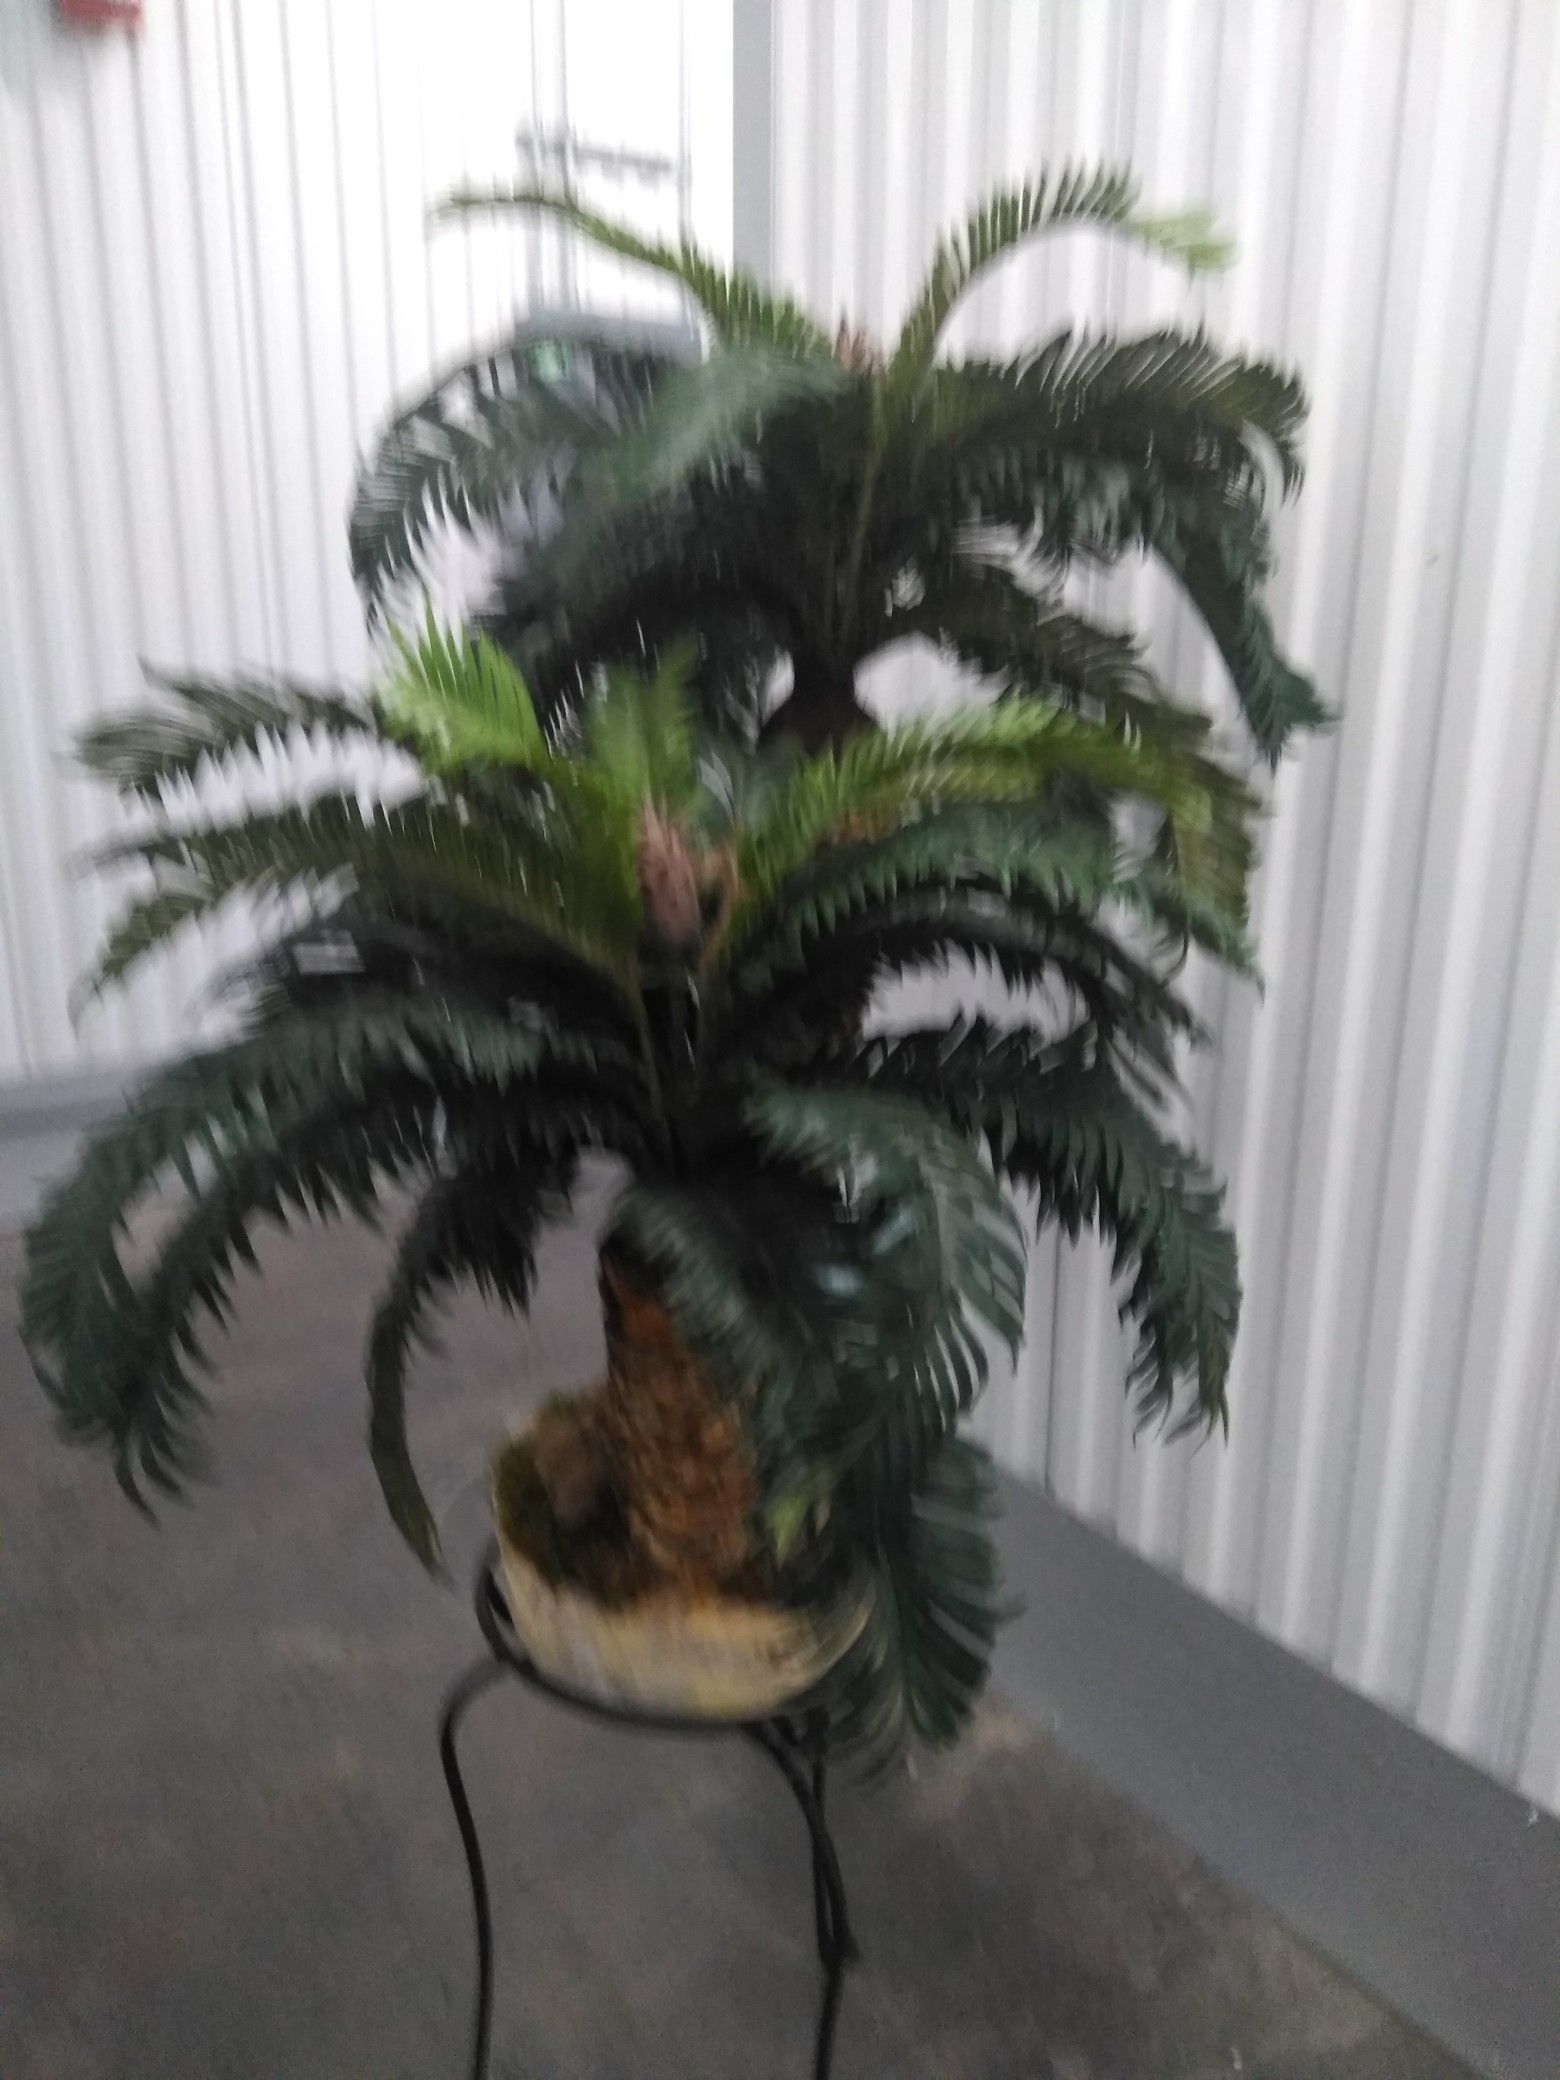 Small fake plant